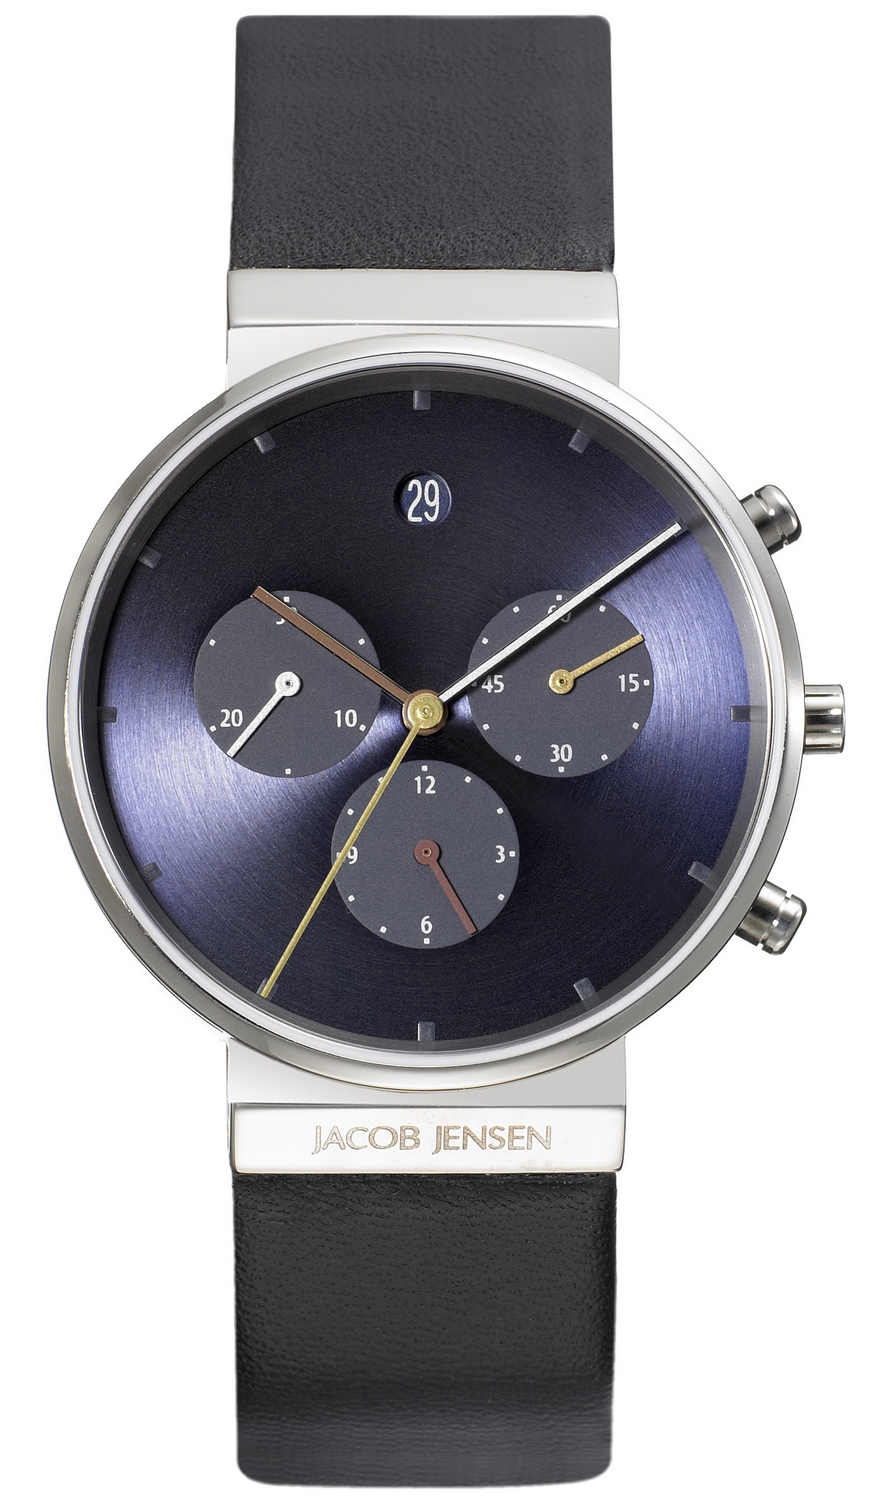 Jacob Jensen 605 chronograaf staand